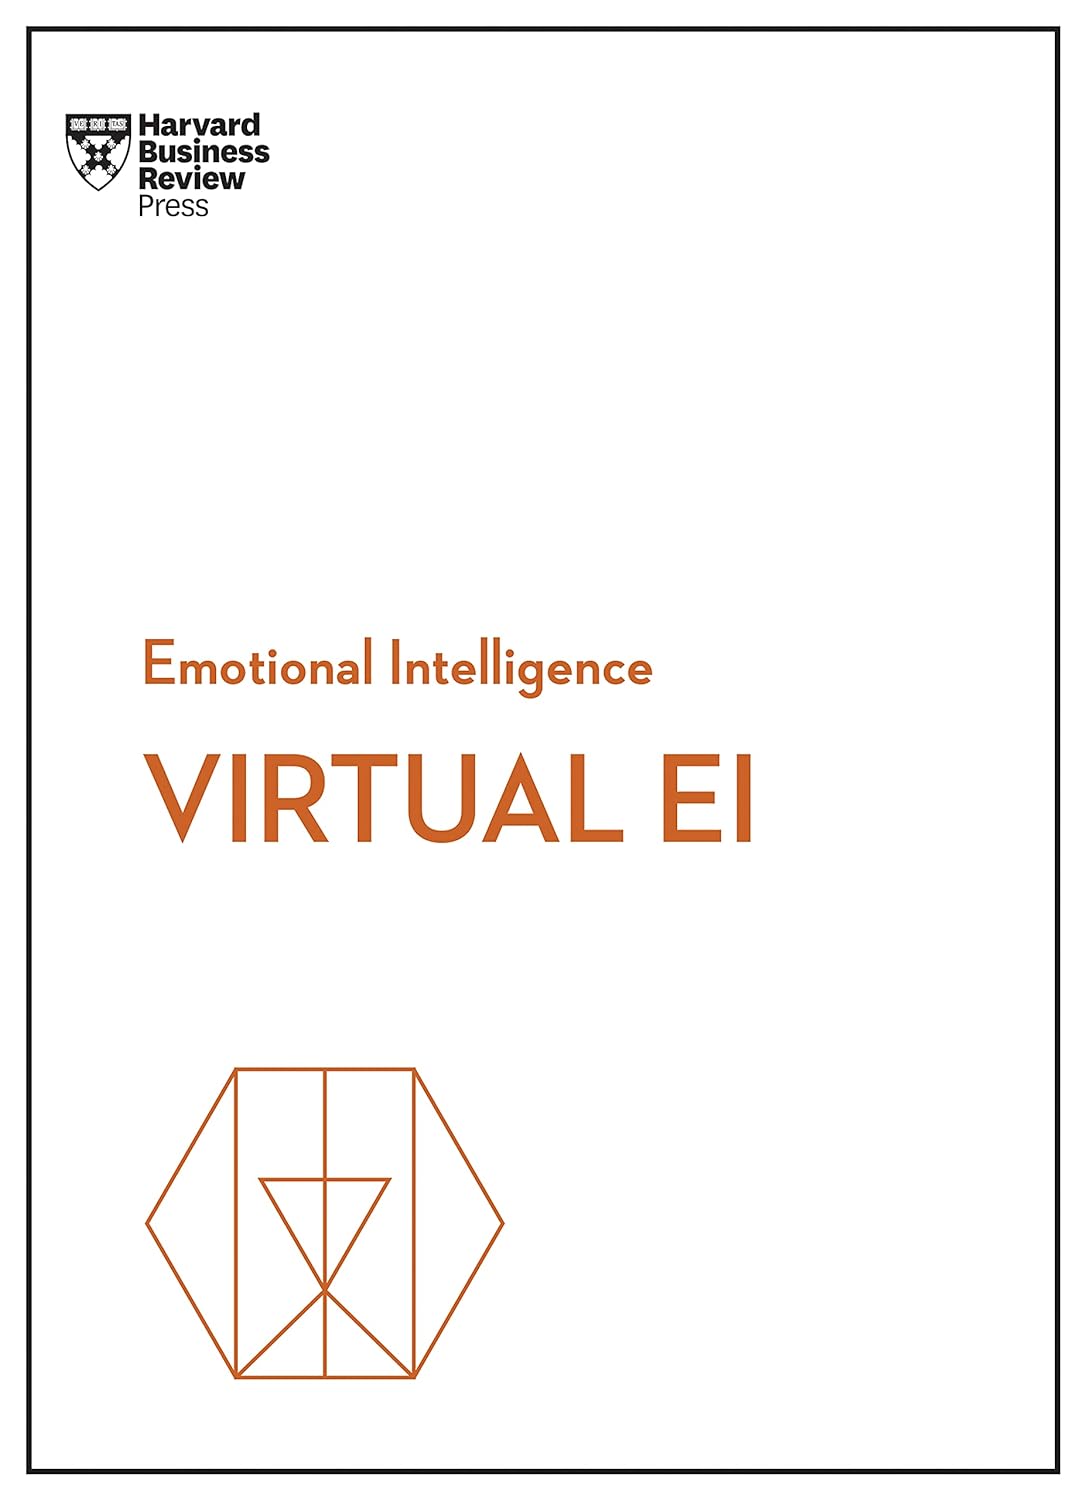 Virtual EI 